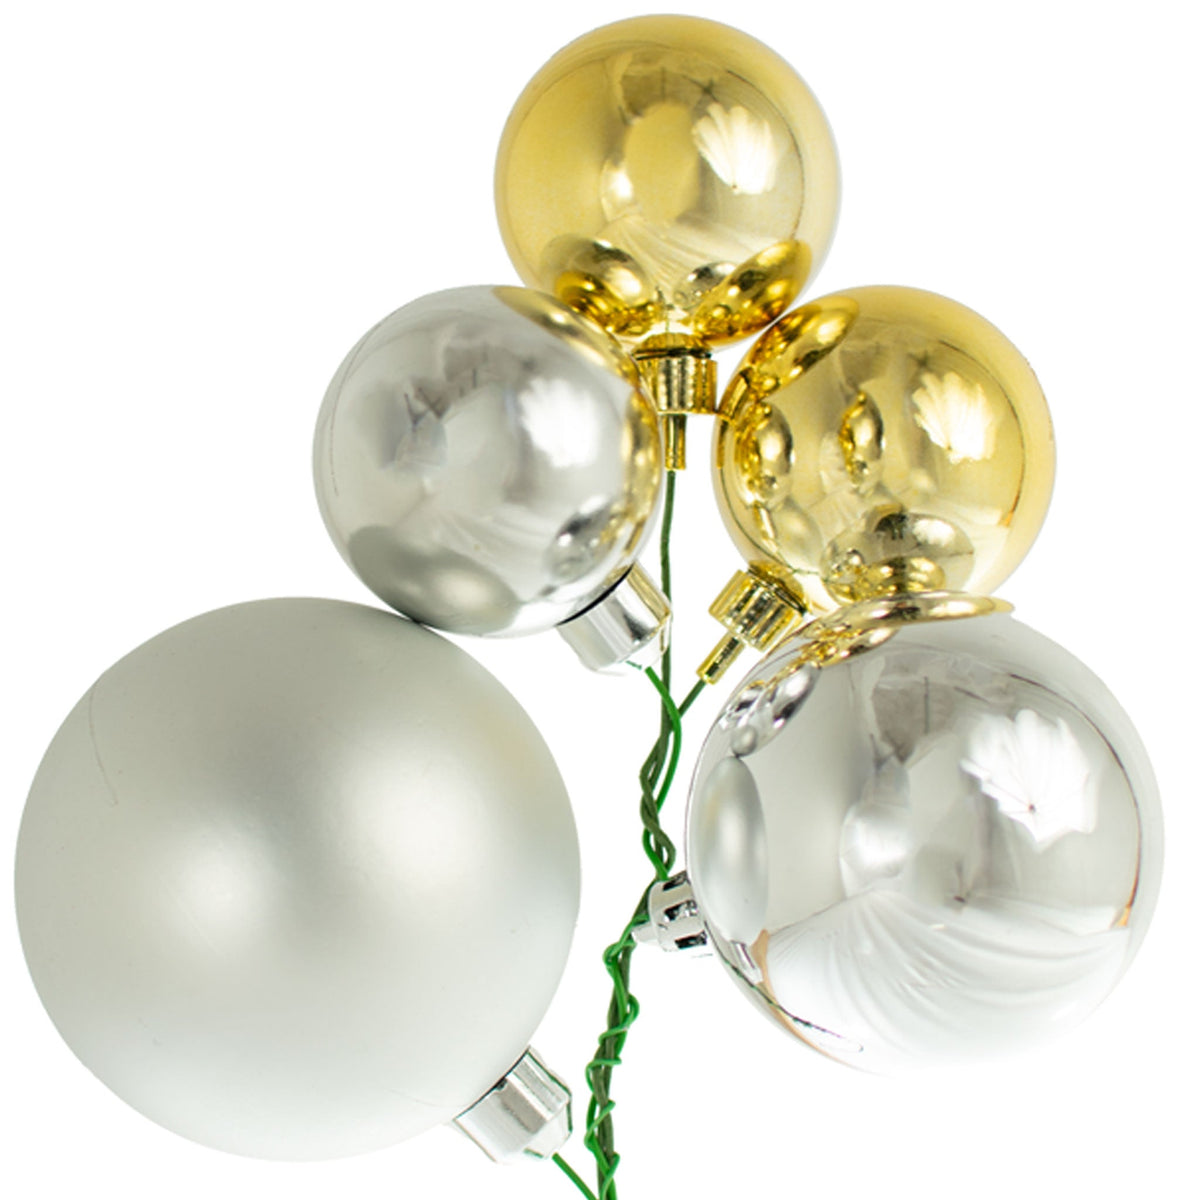 Colors include:  2 - Shiny Gold Ball Ornaments (50MM) 2 - Shiny Silver Ball Ornaments (70MM & 60MM) 1 - Matte Silver Ball Ornament (80MM)